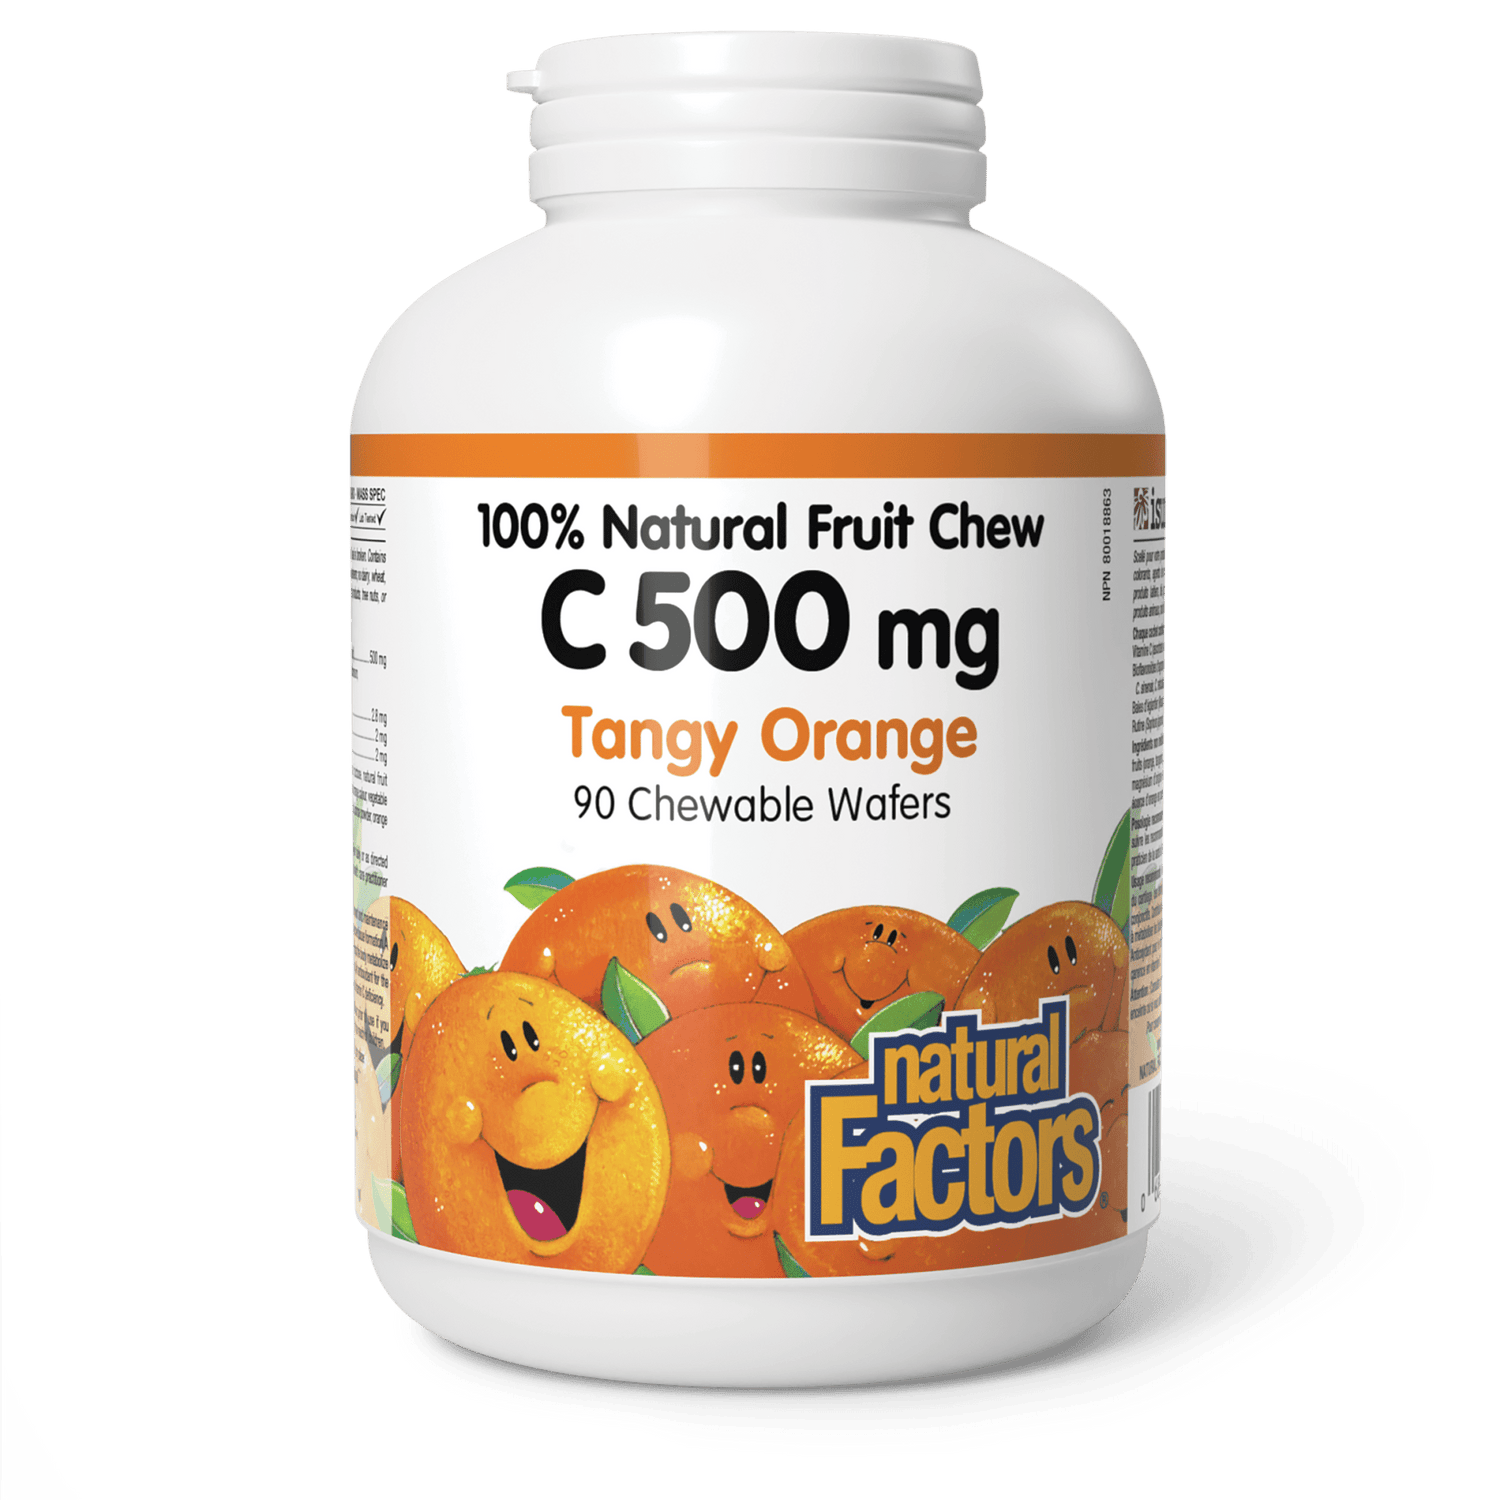 C 500 mg 100% Natural Fruit Chew, Tangy Orange, Natural Factors|v|image|1330